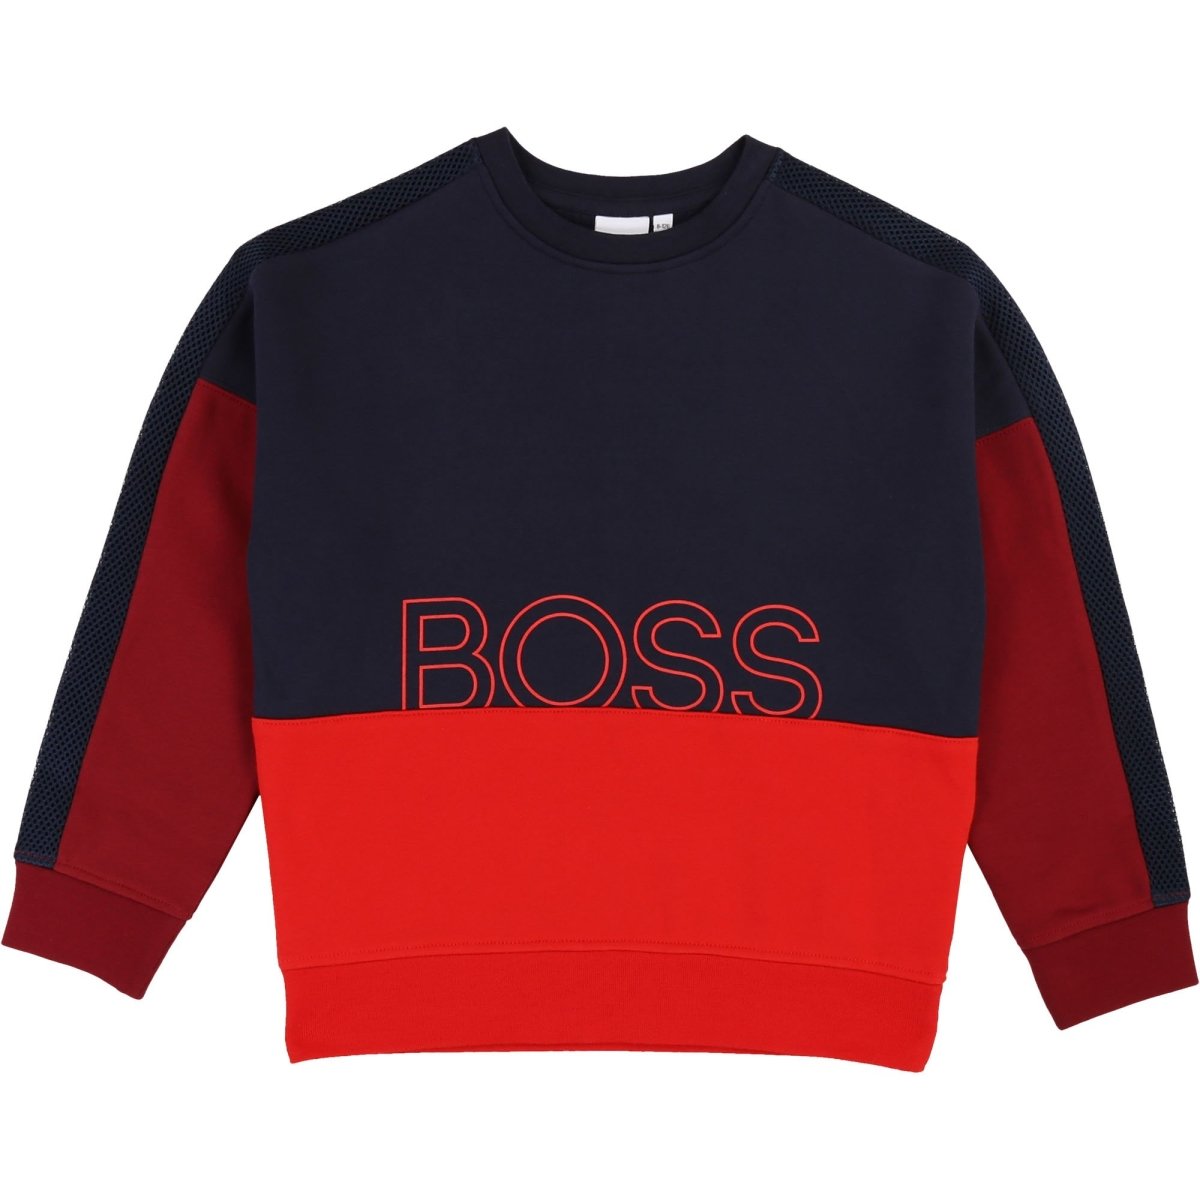 Hugo Boss Boys Sweatshirt 192 J25E16 Sweatshirts and Sweatpants Hugo Boss 